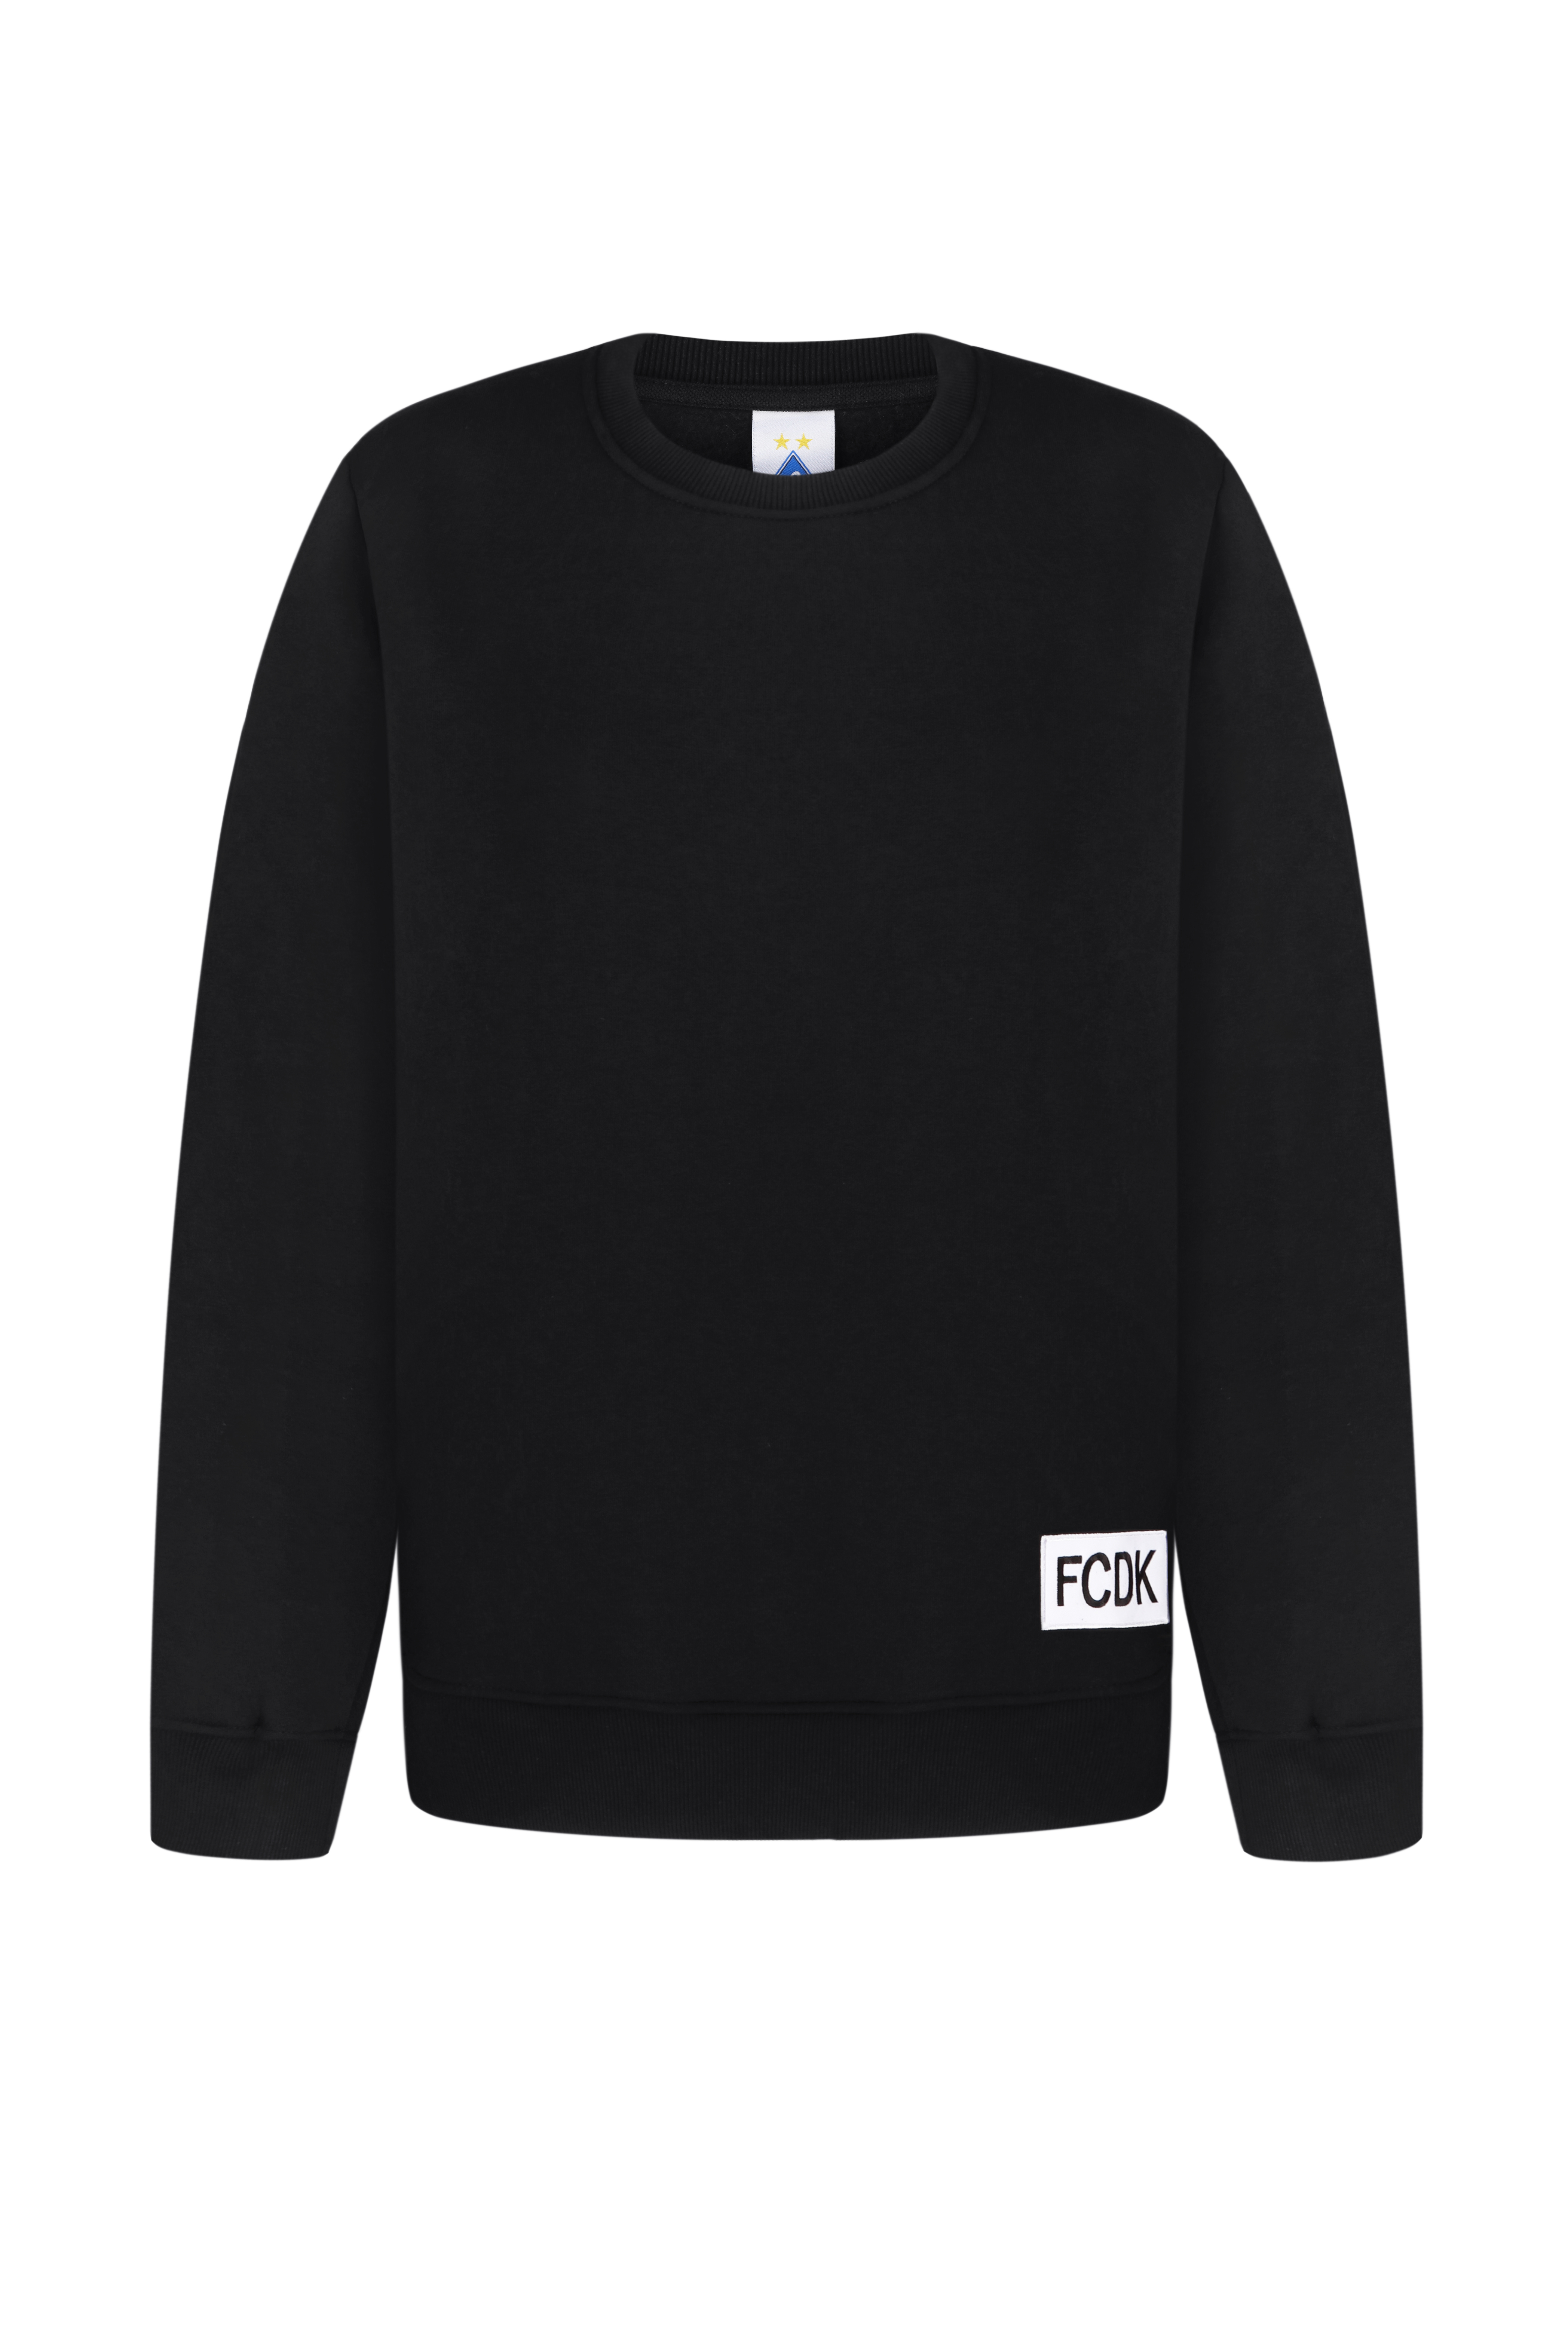 Black sweatshirt "FCDK"